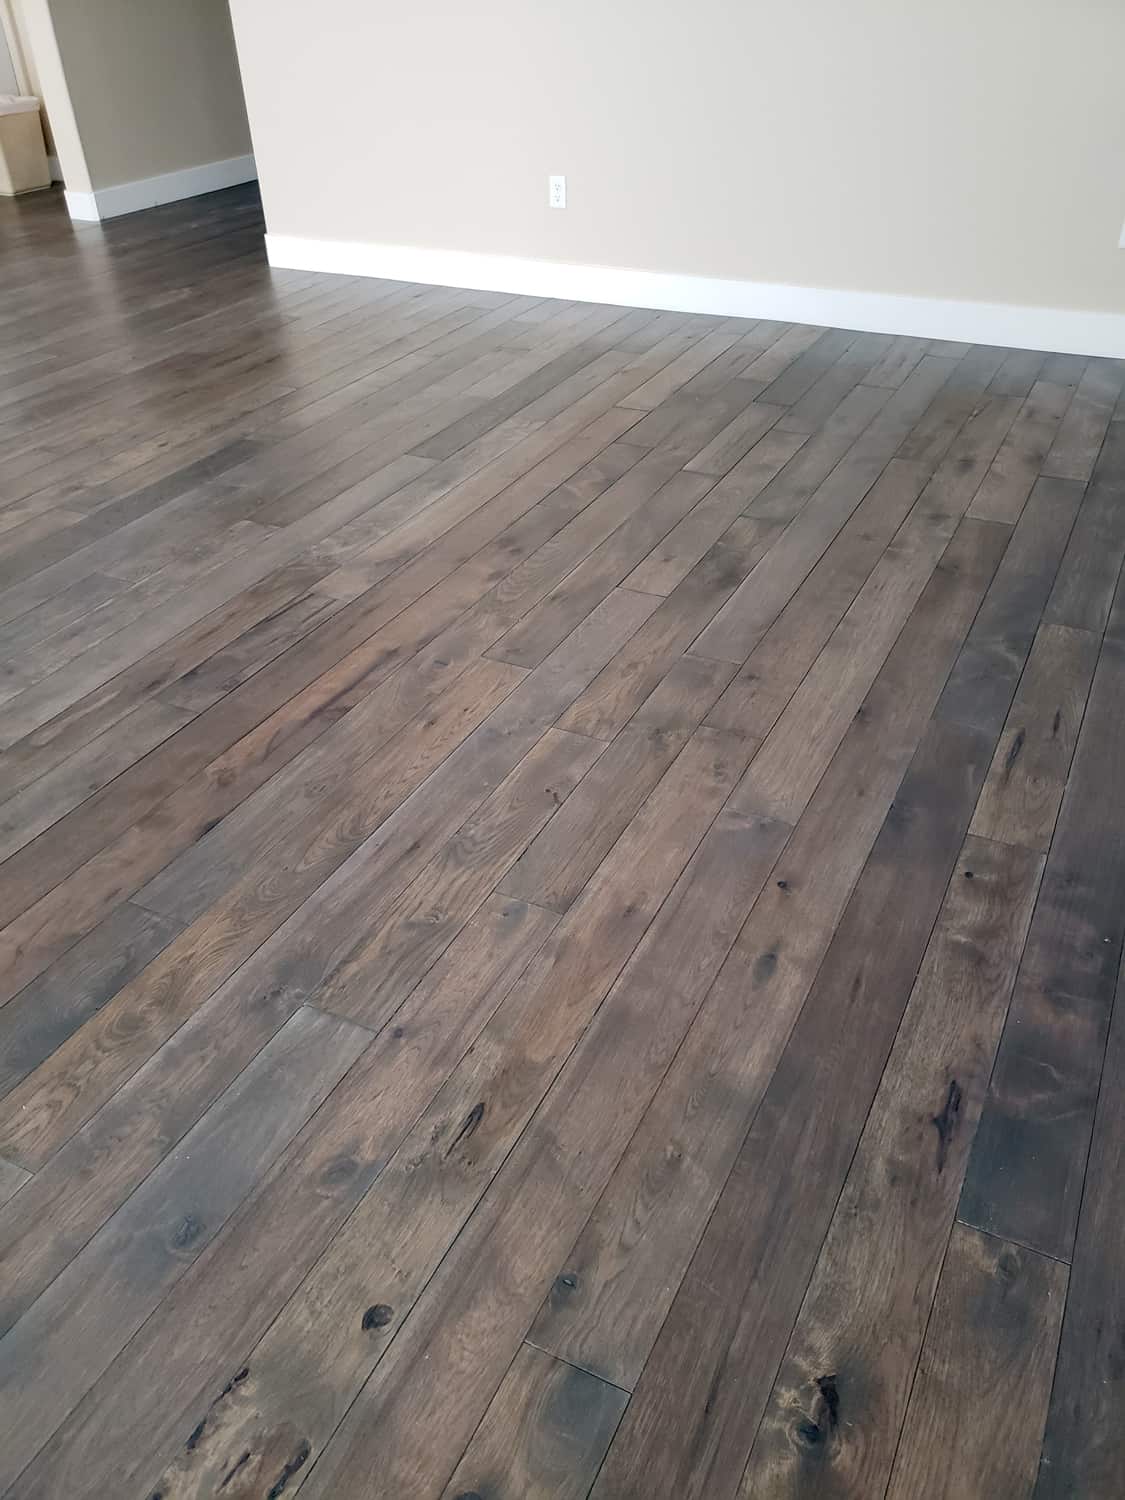 Installing Hardwood Floors from Start to Finish